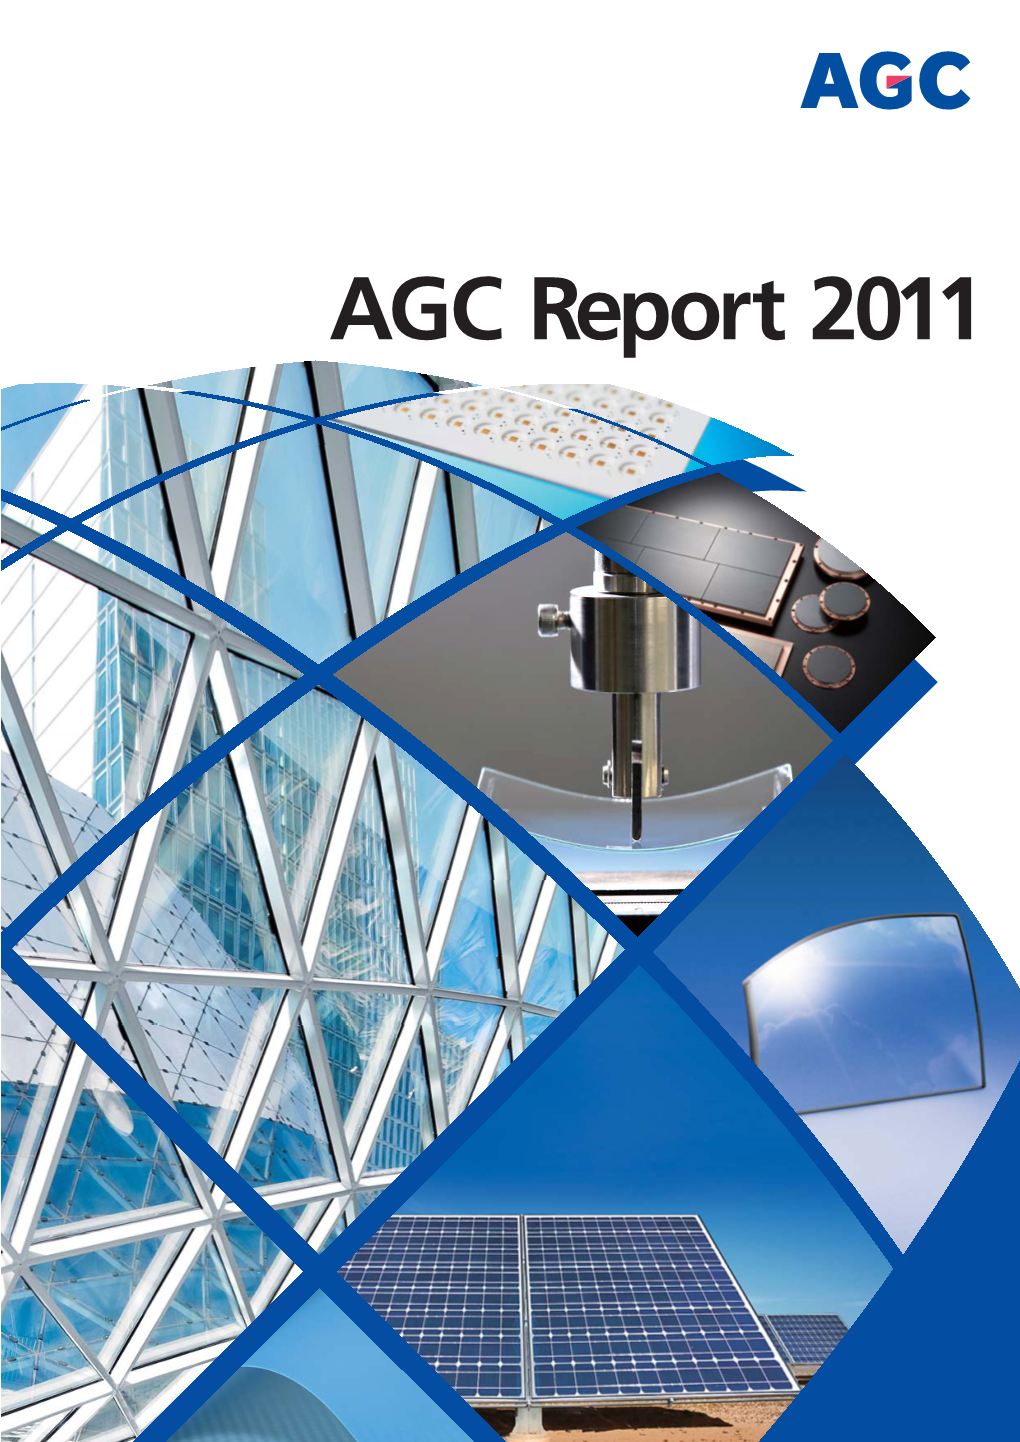 AGC Report 2011 the AGC Group, with Asahi Glass Co., Ltd